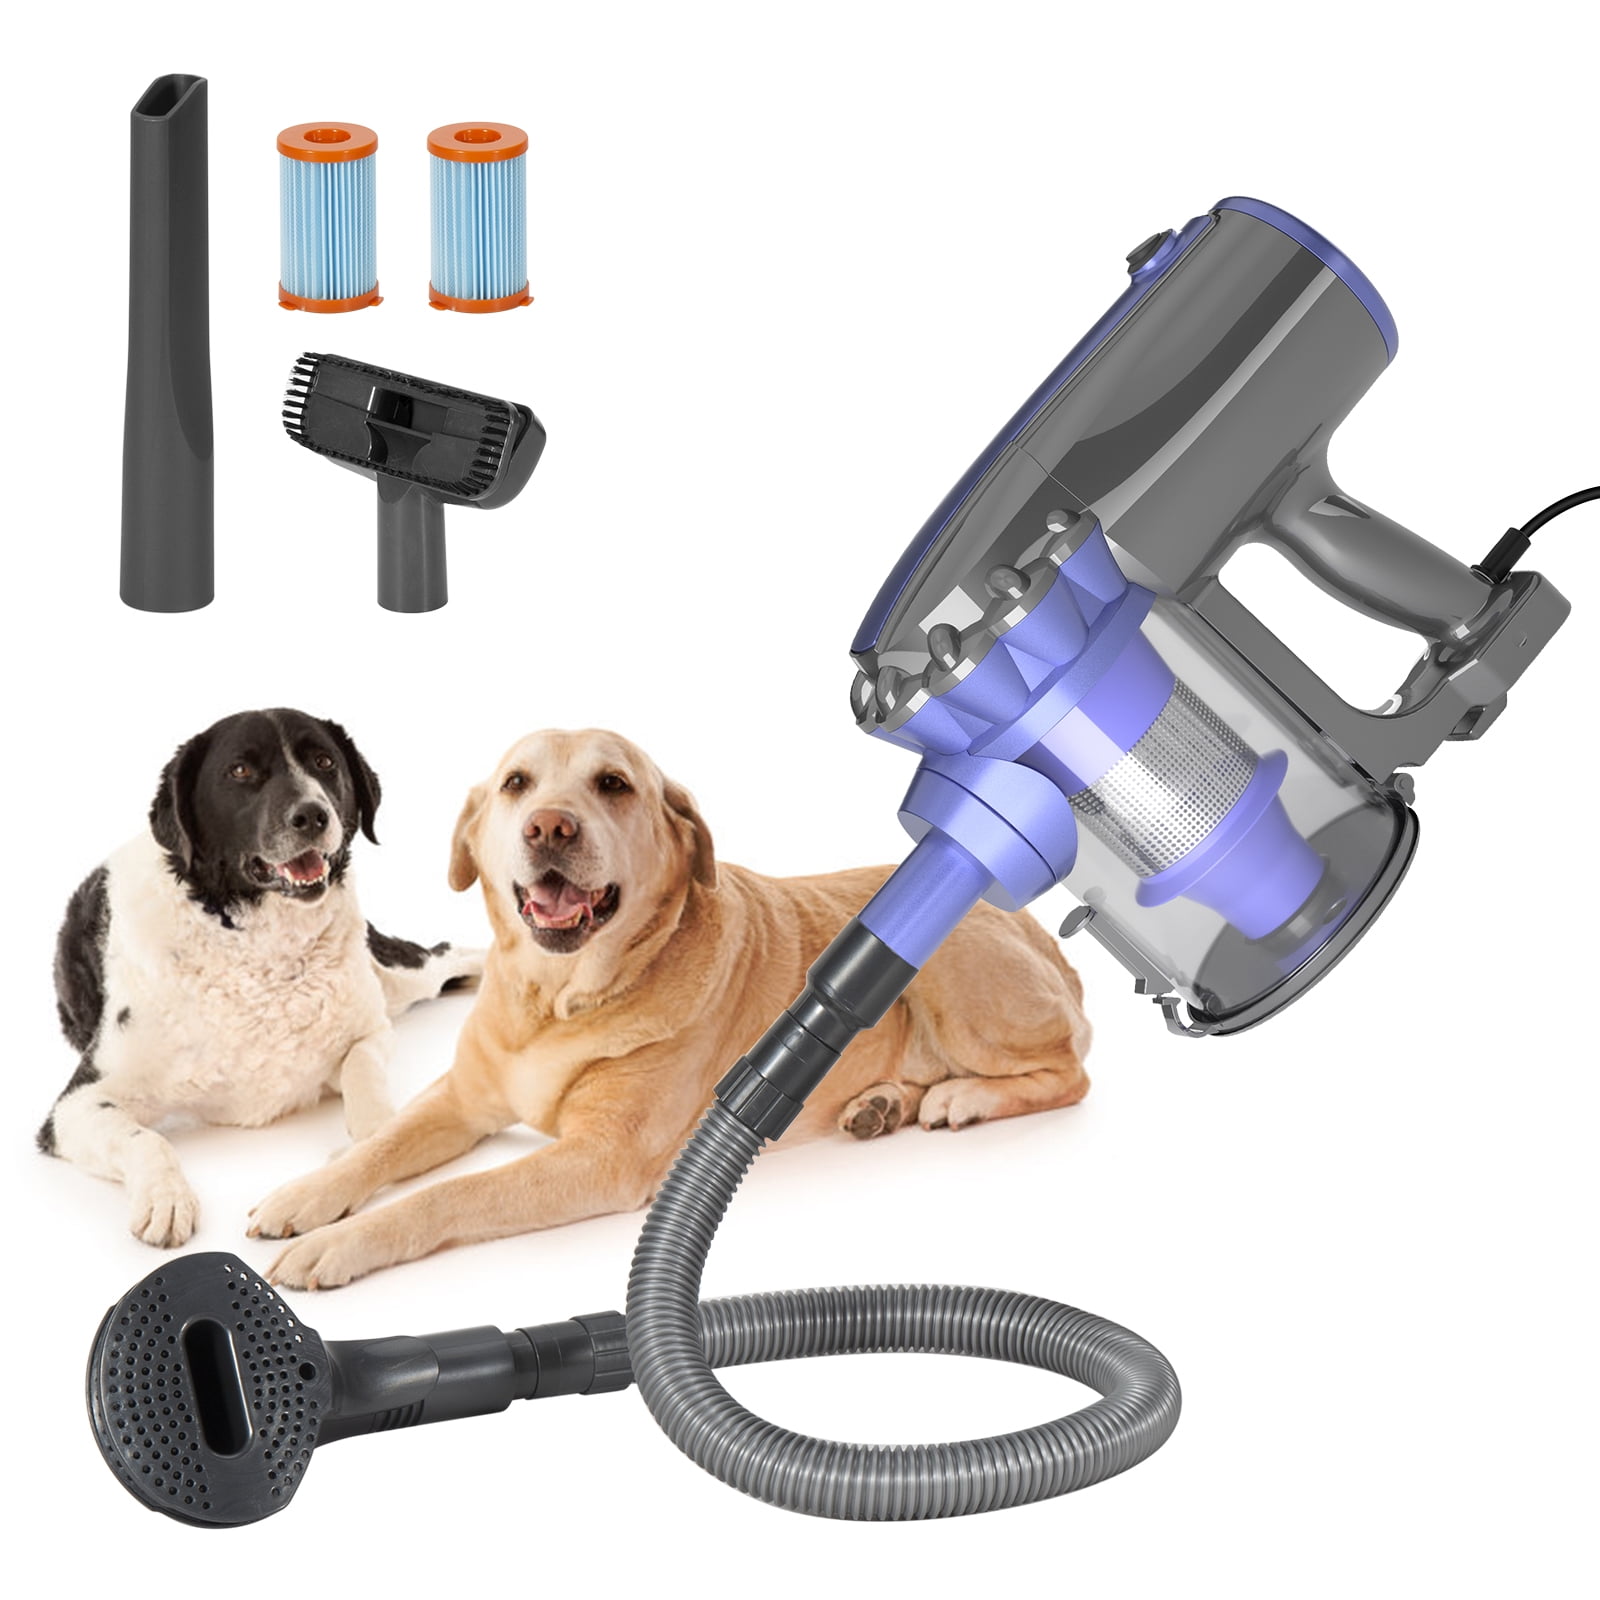 17kpa Strong Suction Vacuum Cleaner with Pet Grooming Brush Umoot Handheld Vacuum 4 in 1 Corded Handheld Vacuum for Home